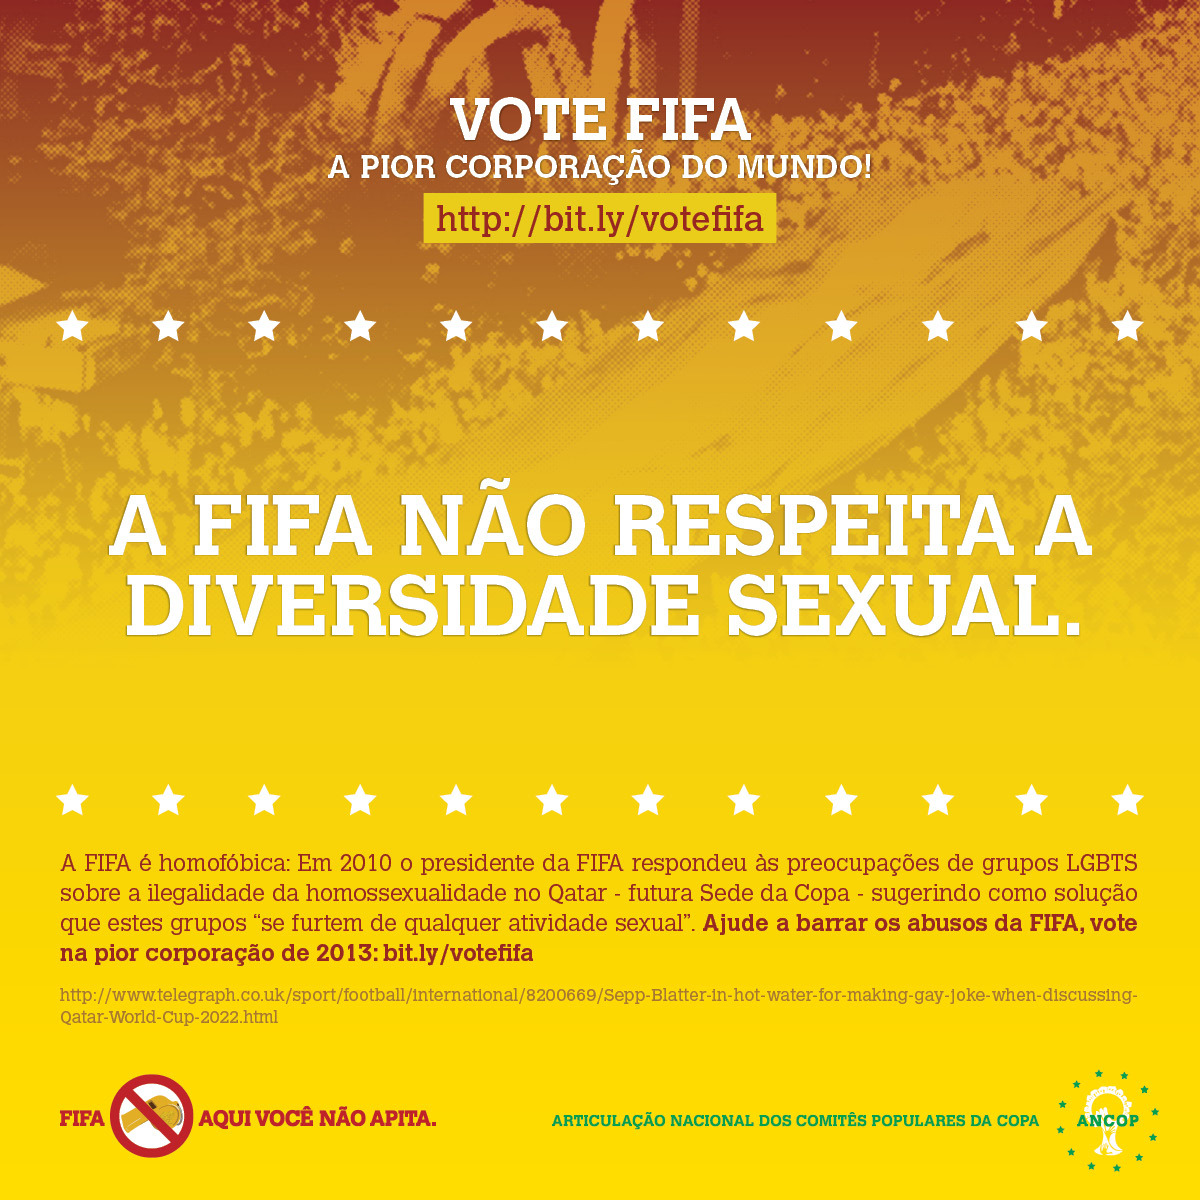 LGBTS no futebol SIM! Sai pra lá, FIFA! VOTE: http://bit.ly/votefifa